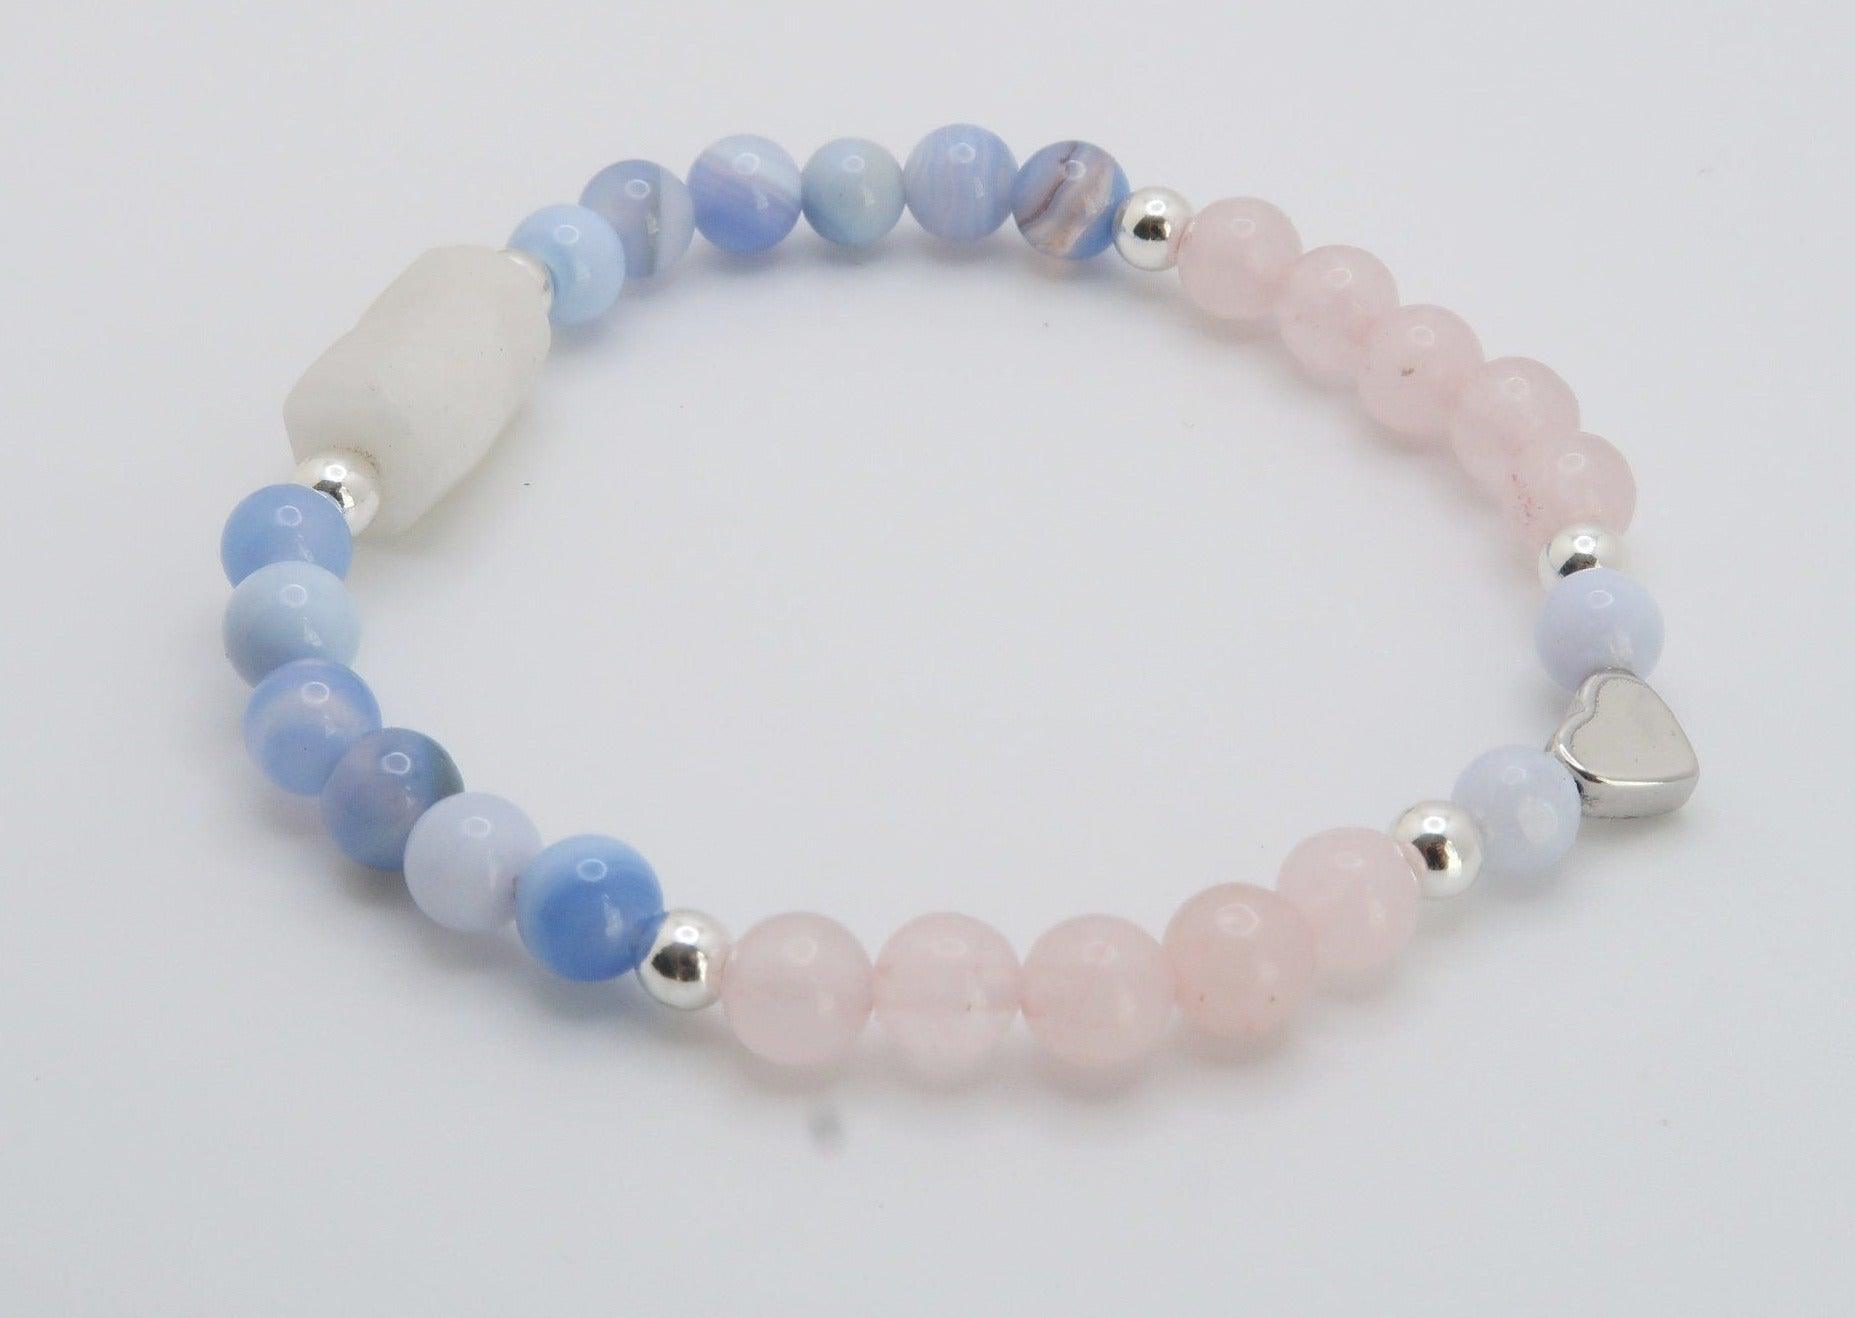 New Mama Healing Gemstone Bracelet featuring rainbow moonstone, rose quartz and blue lace agate. 